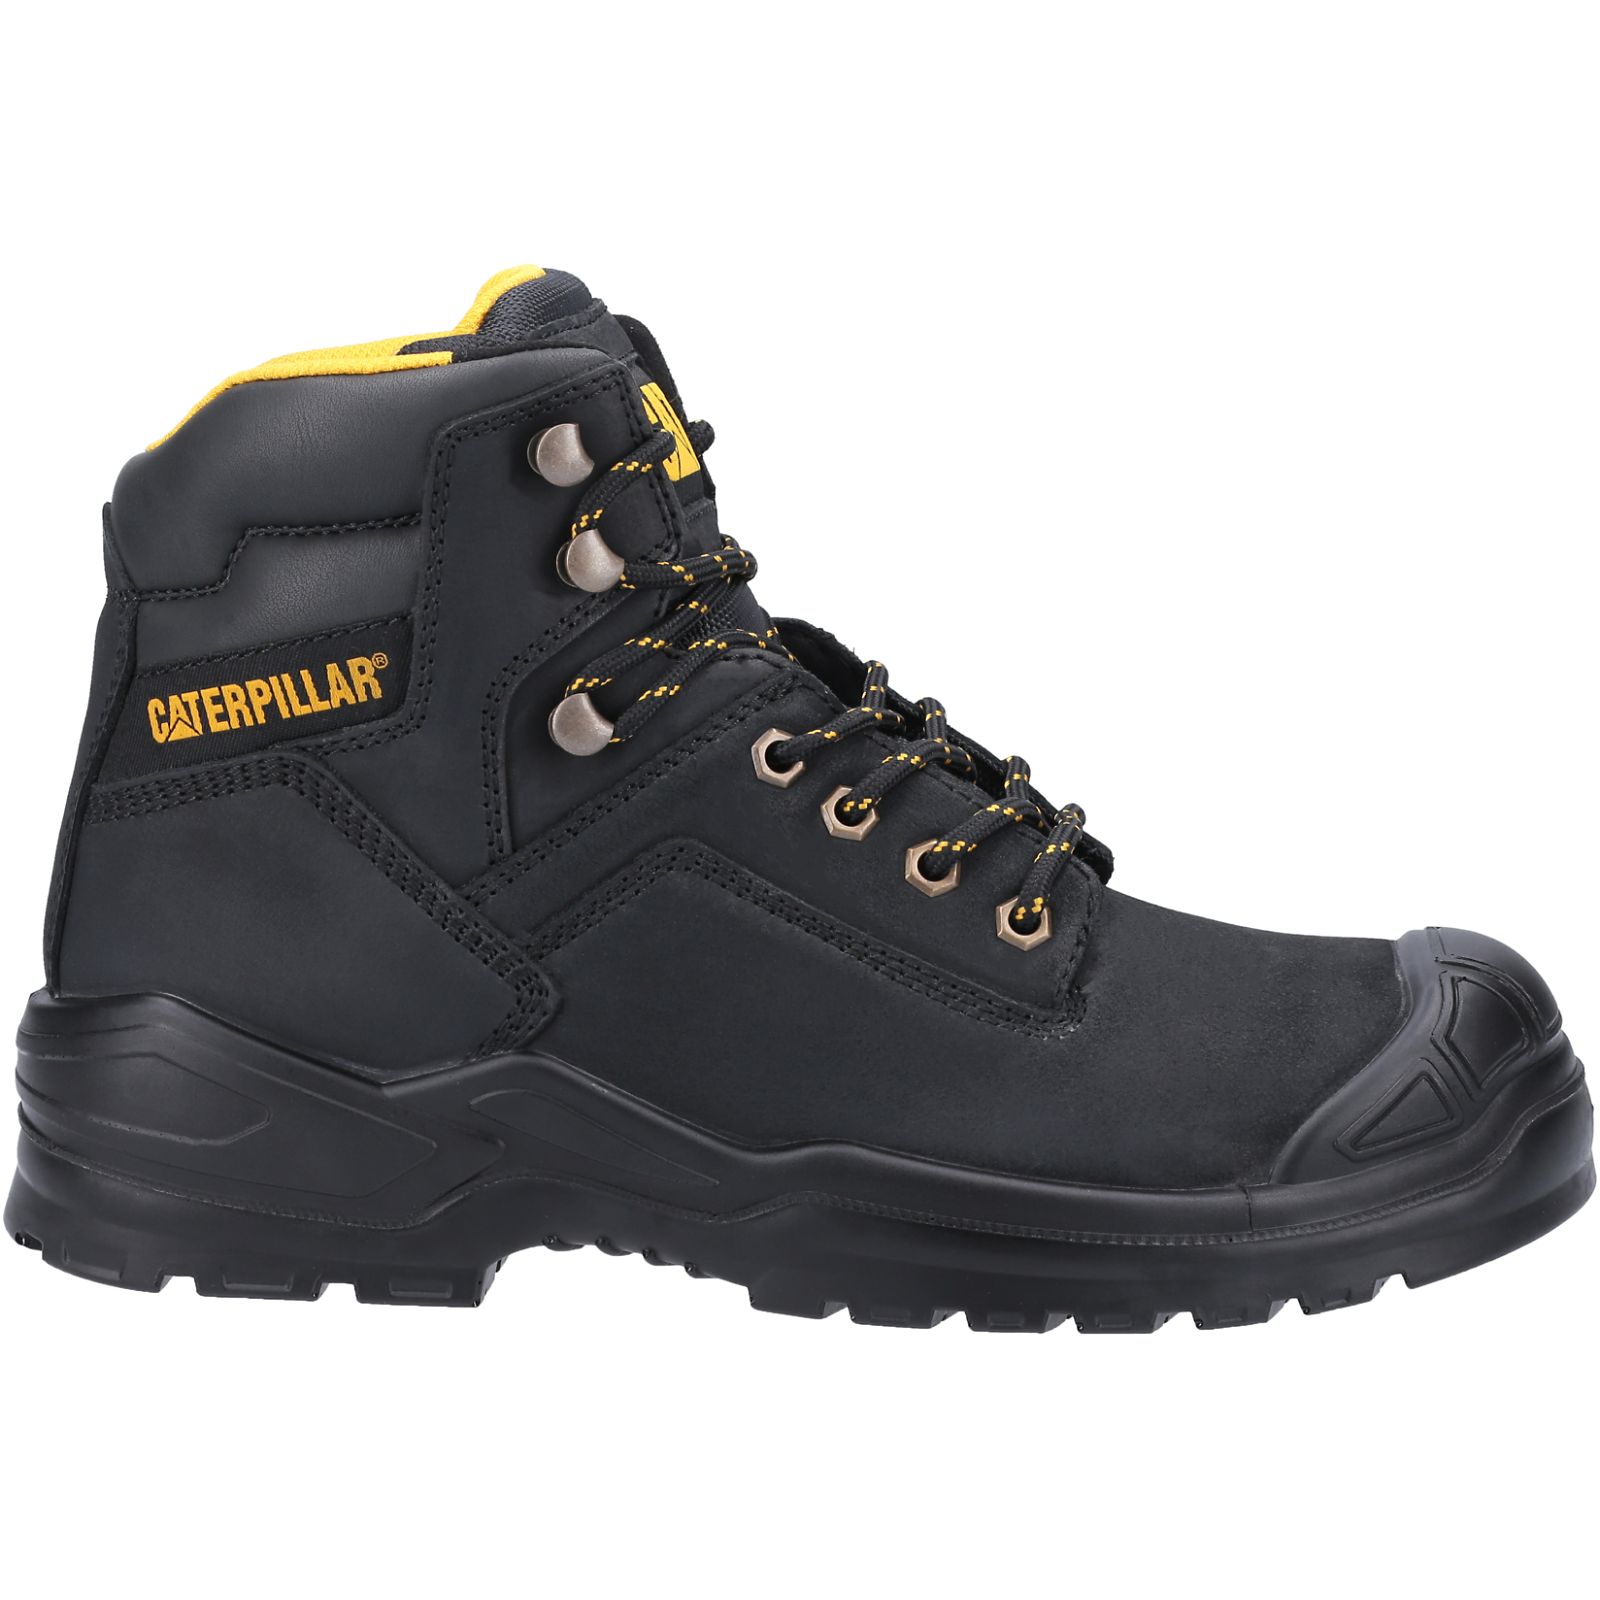 Caterpillar Boots Islamabad - Caterpillar Striver Bump Steel Toe S3 Src Mens Work Boots Black (947065-RUN)